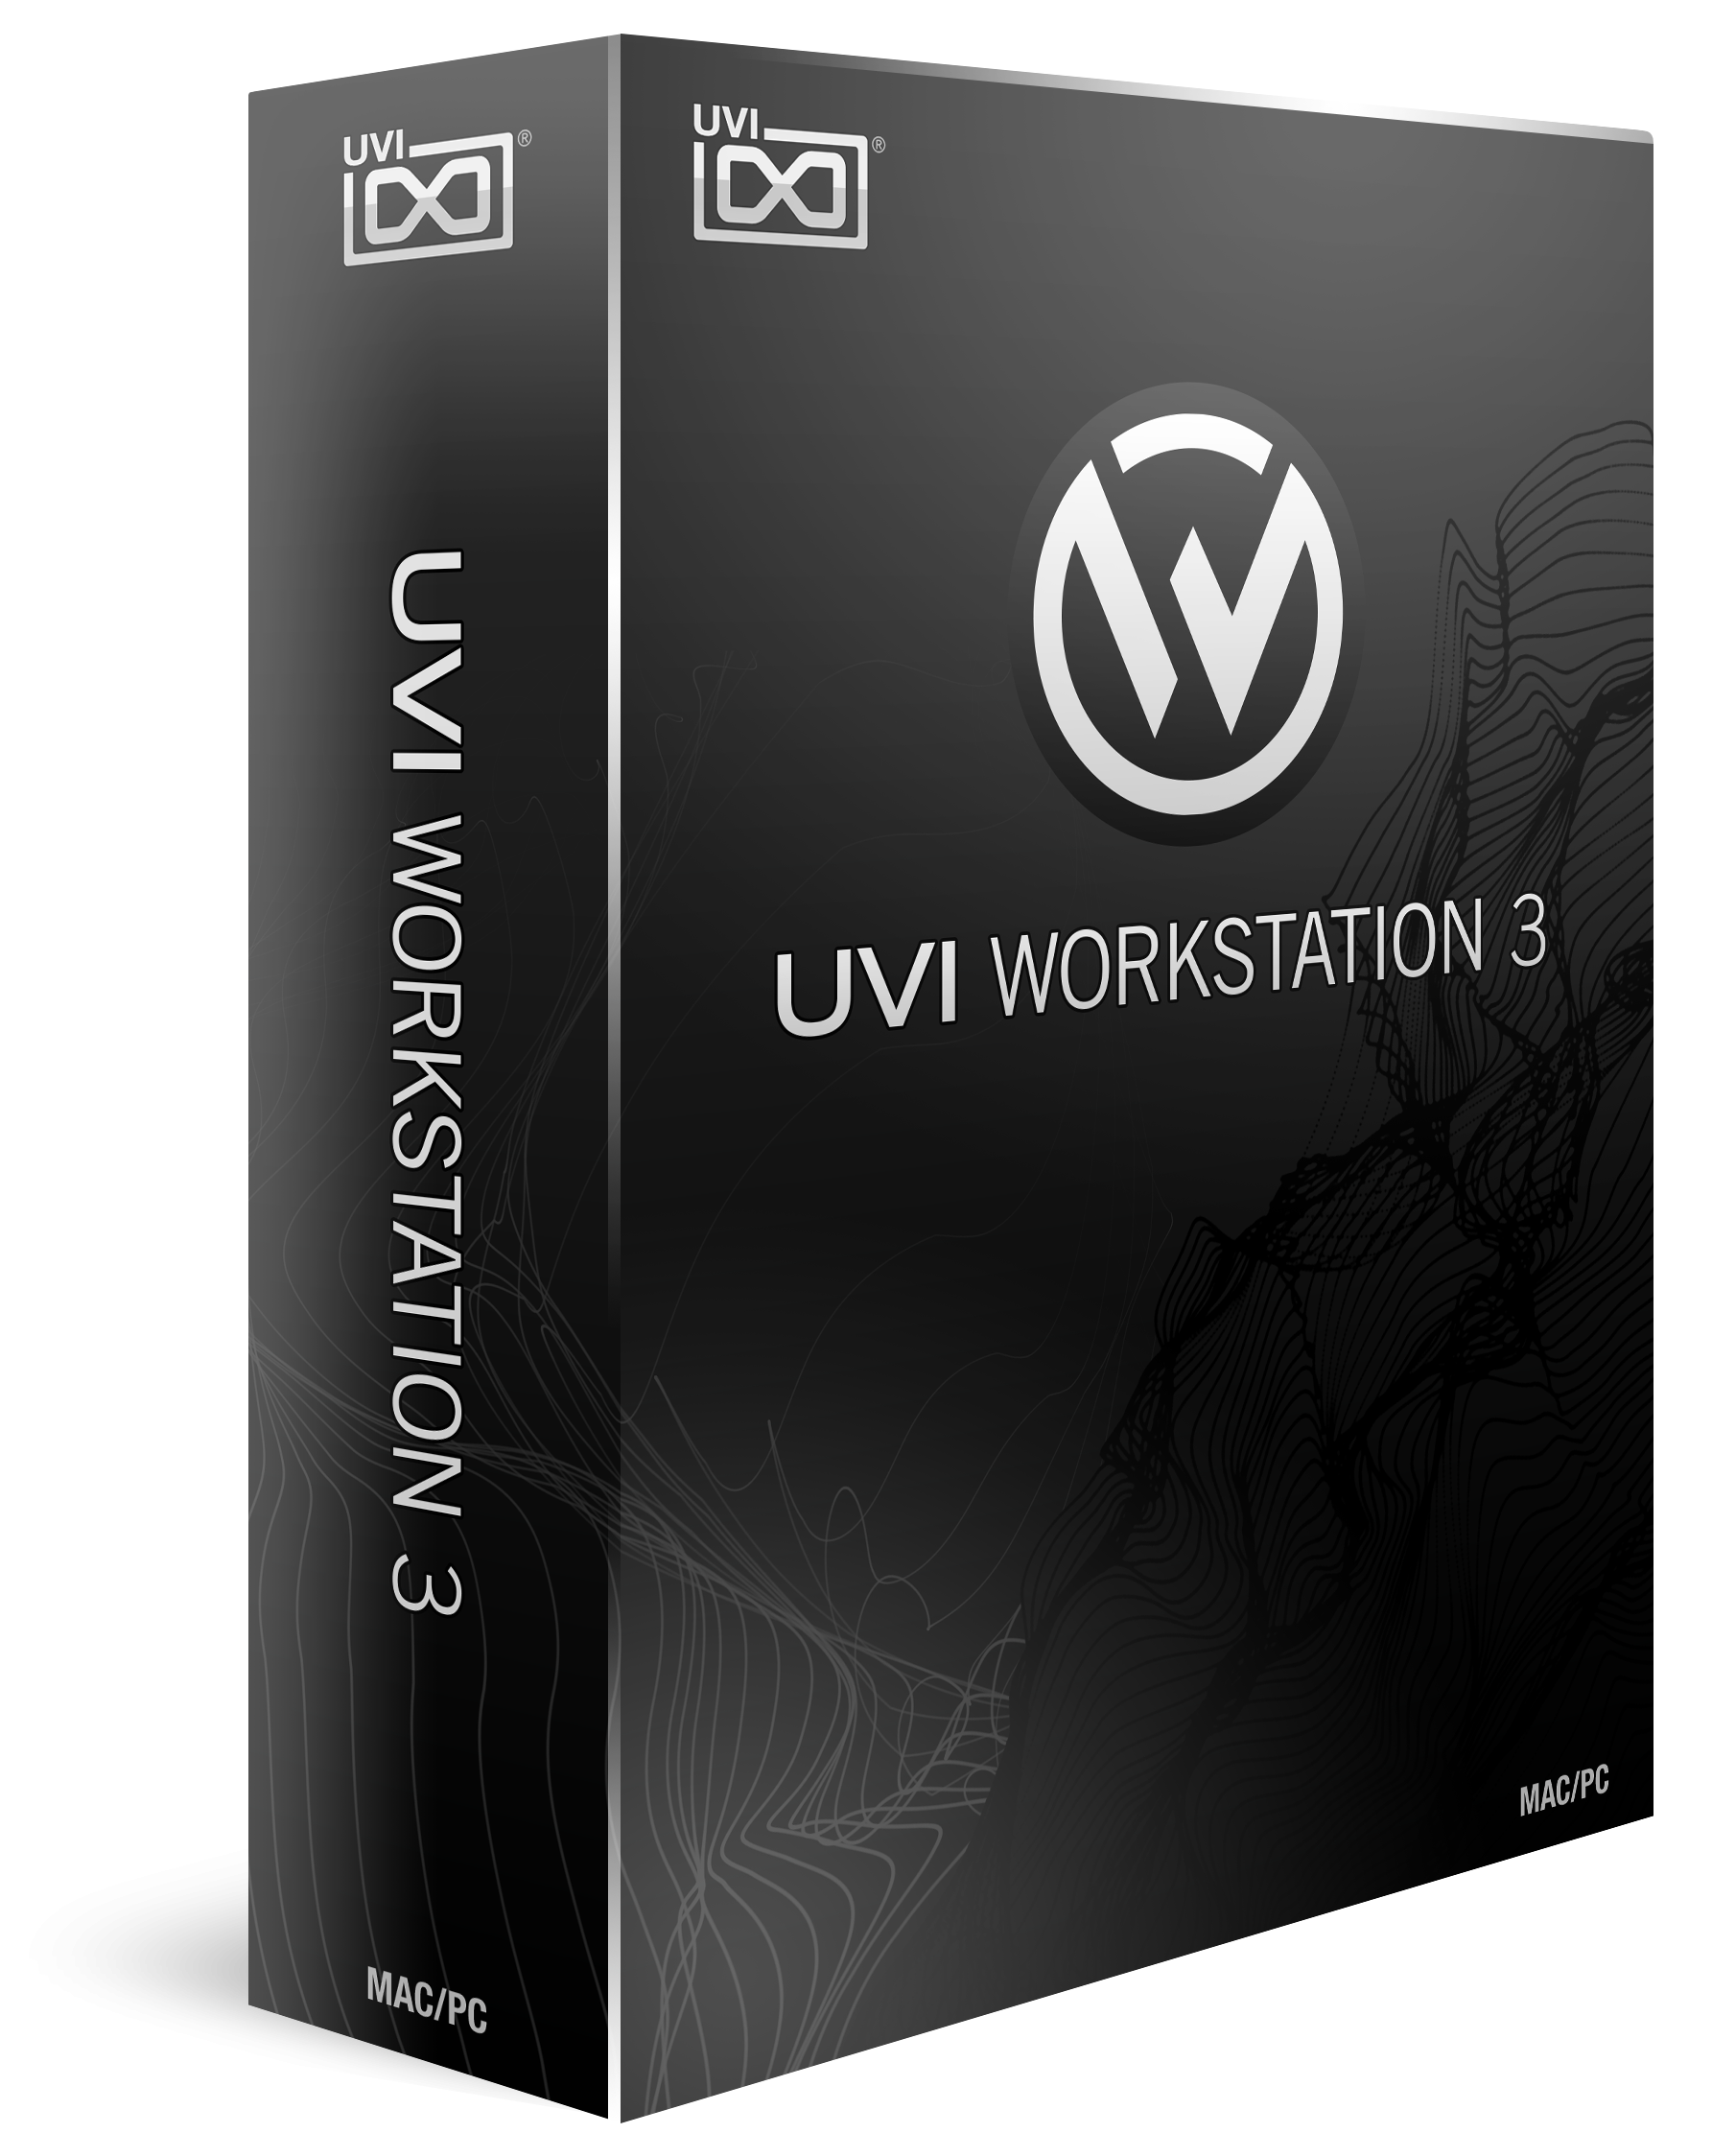 UVIWorkstation